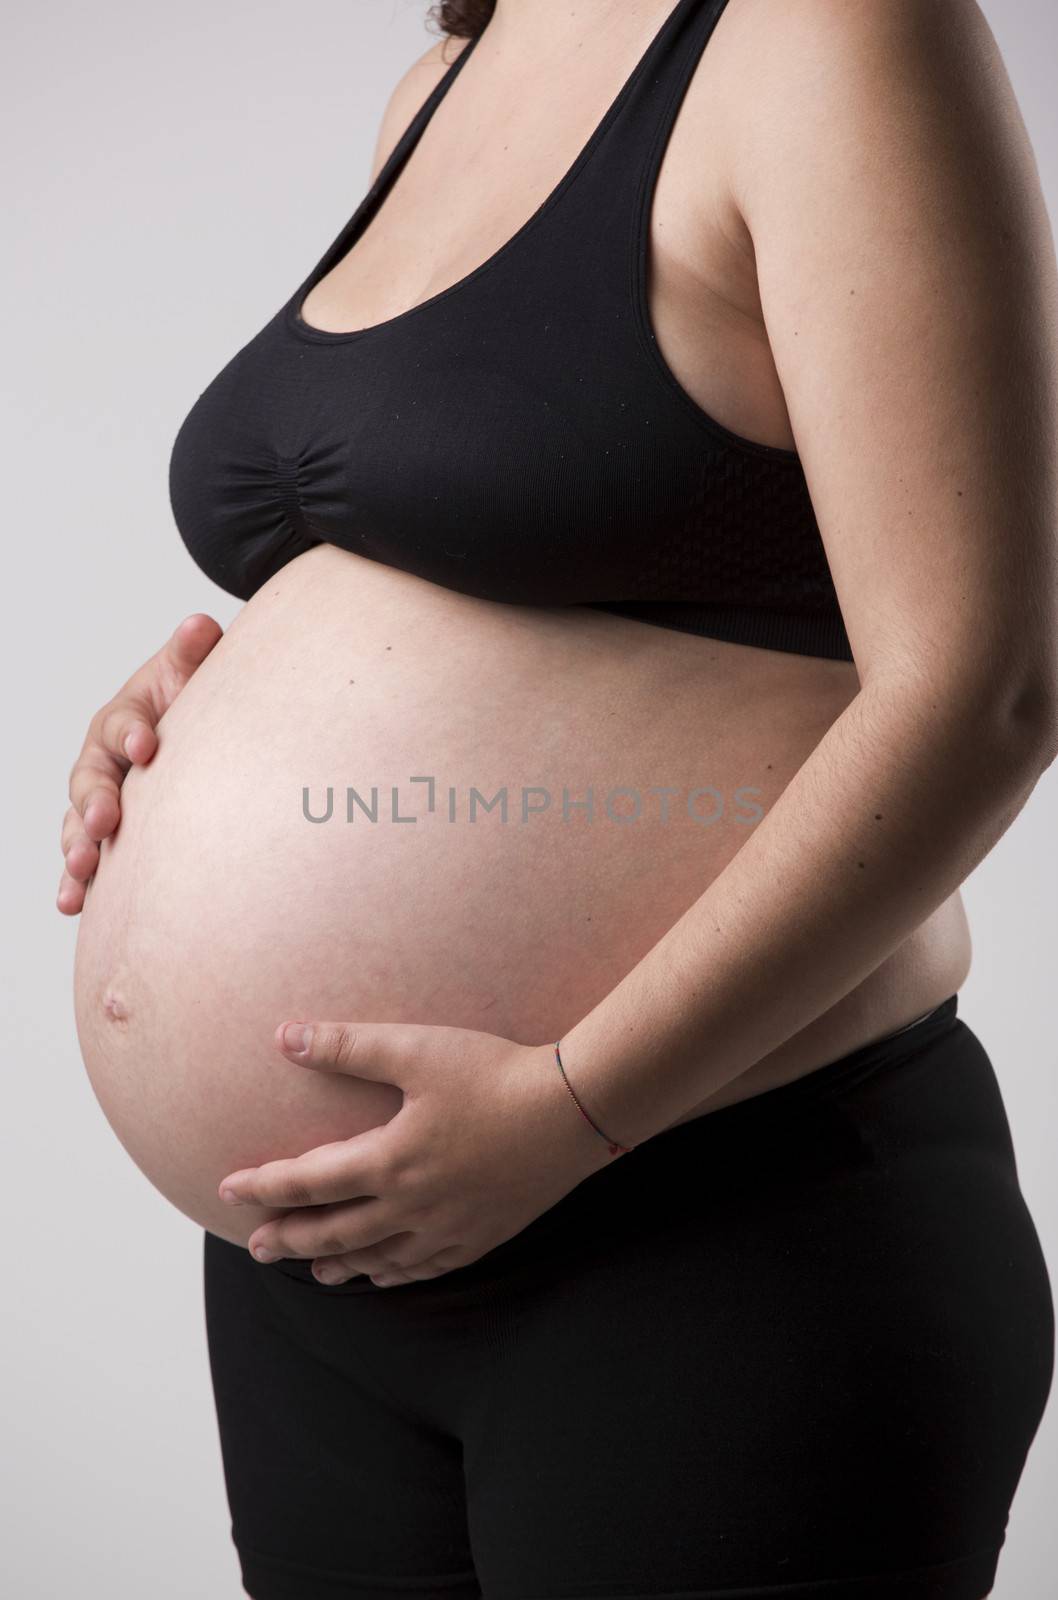 Pregnant woman by Iko